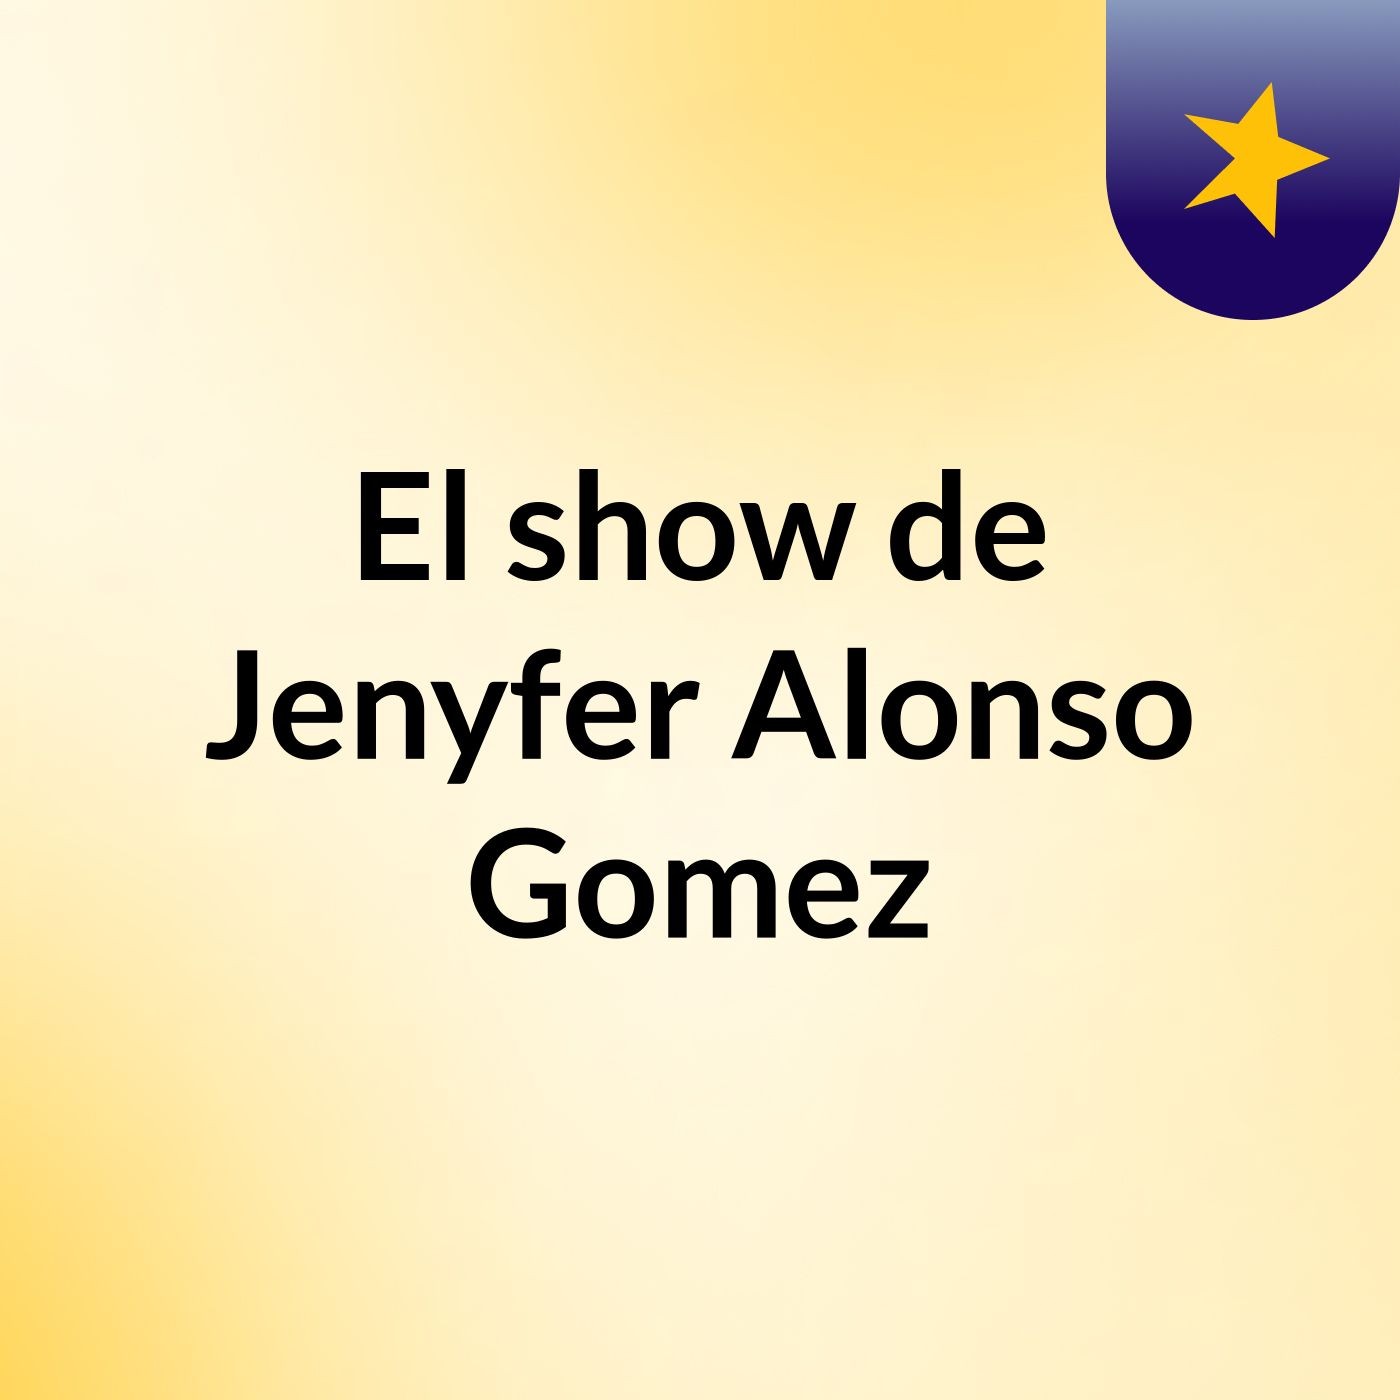 El show de Jenyfer Alonso Gomez